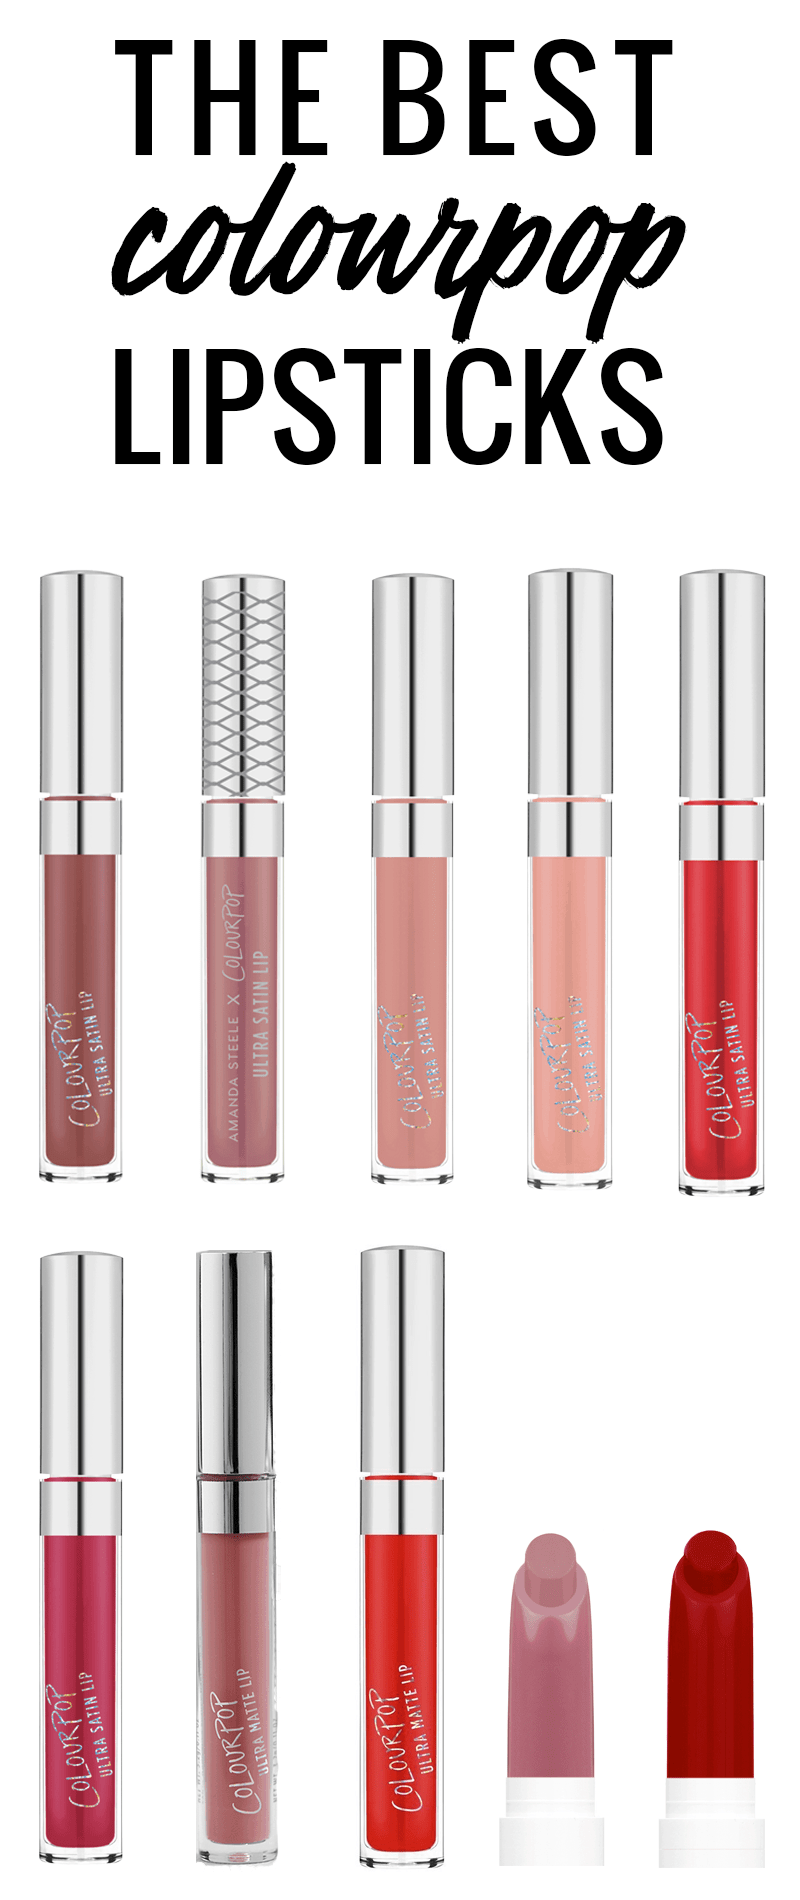 The Best ColourPop Lipsticks by popular beauty blogger Meg O. on the Go